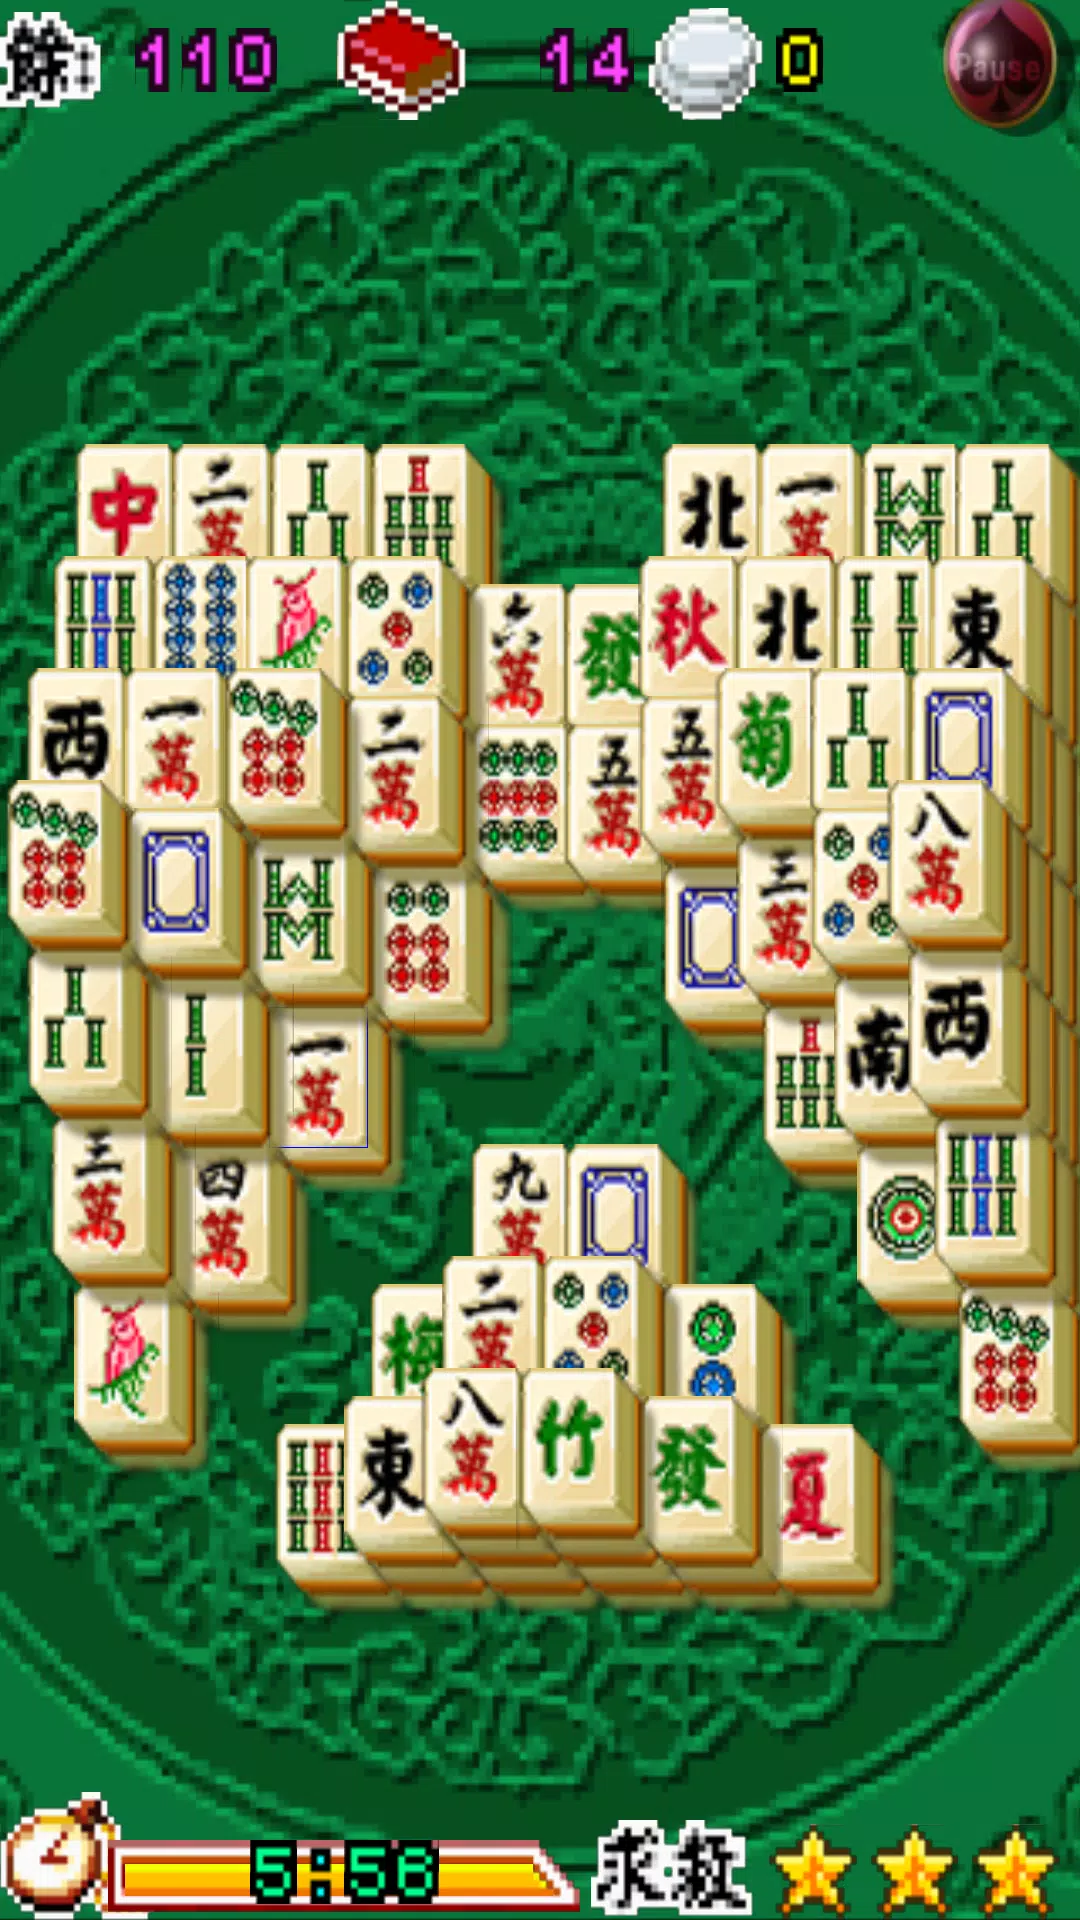 Mahjong Shanghai Jogatina: Jogo de Tabuleiro APK (Android Game